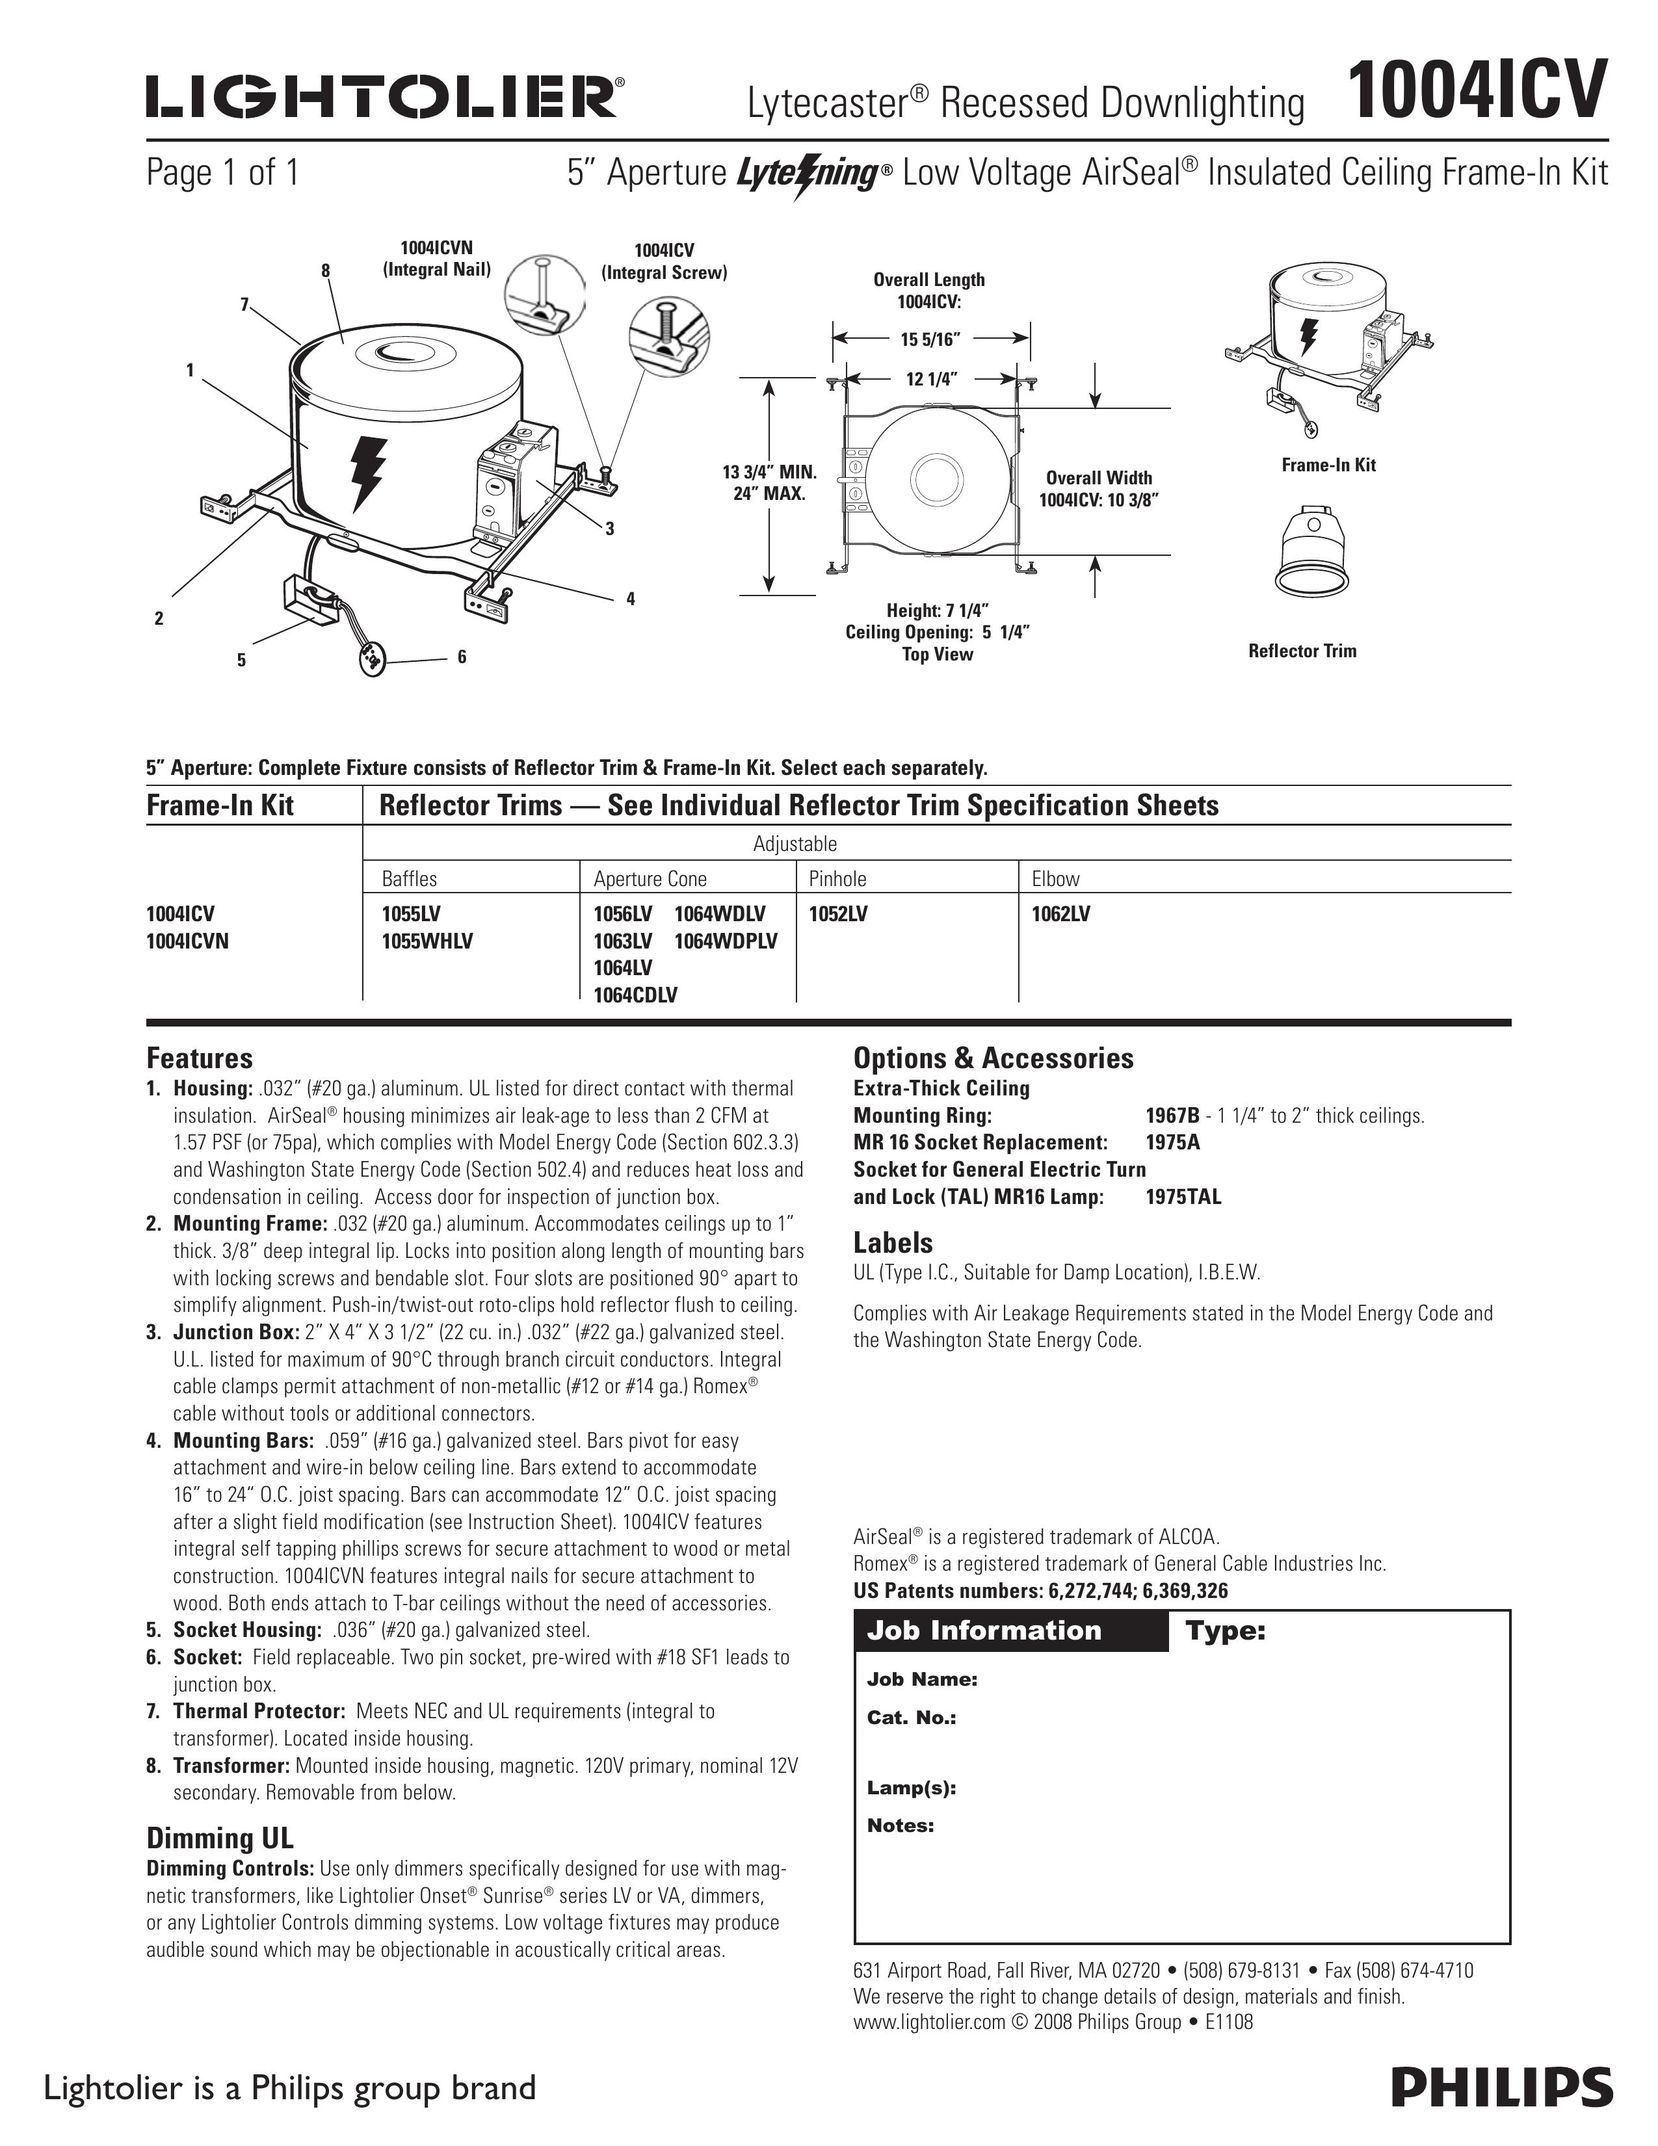 Lightolier 1004ICV Indoor Furnishings User Manual